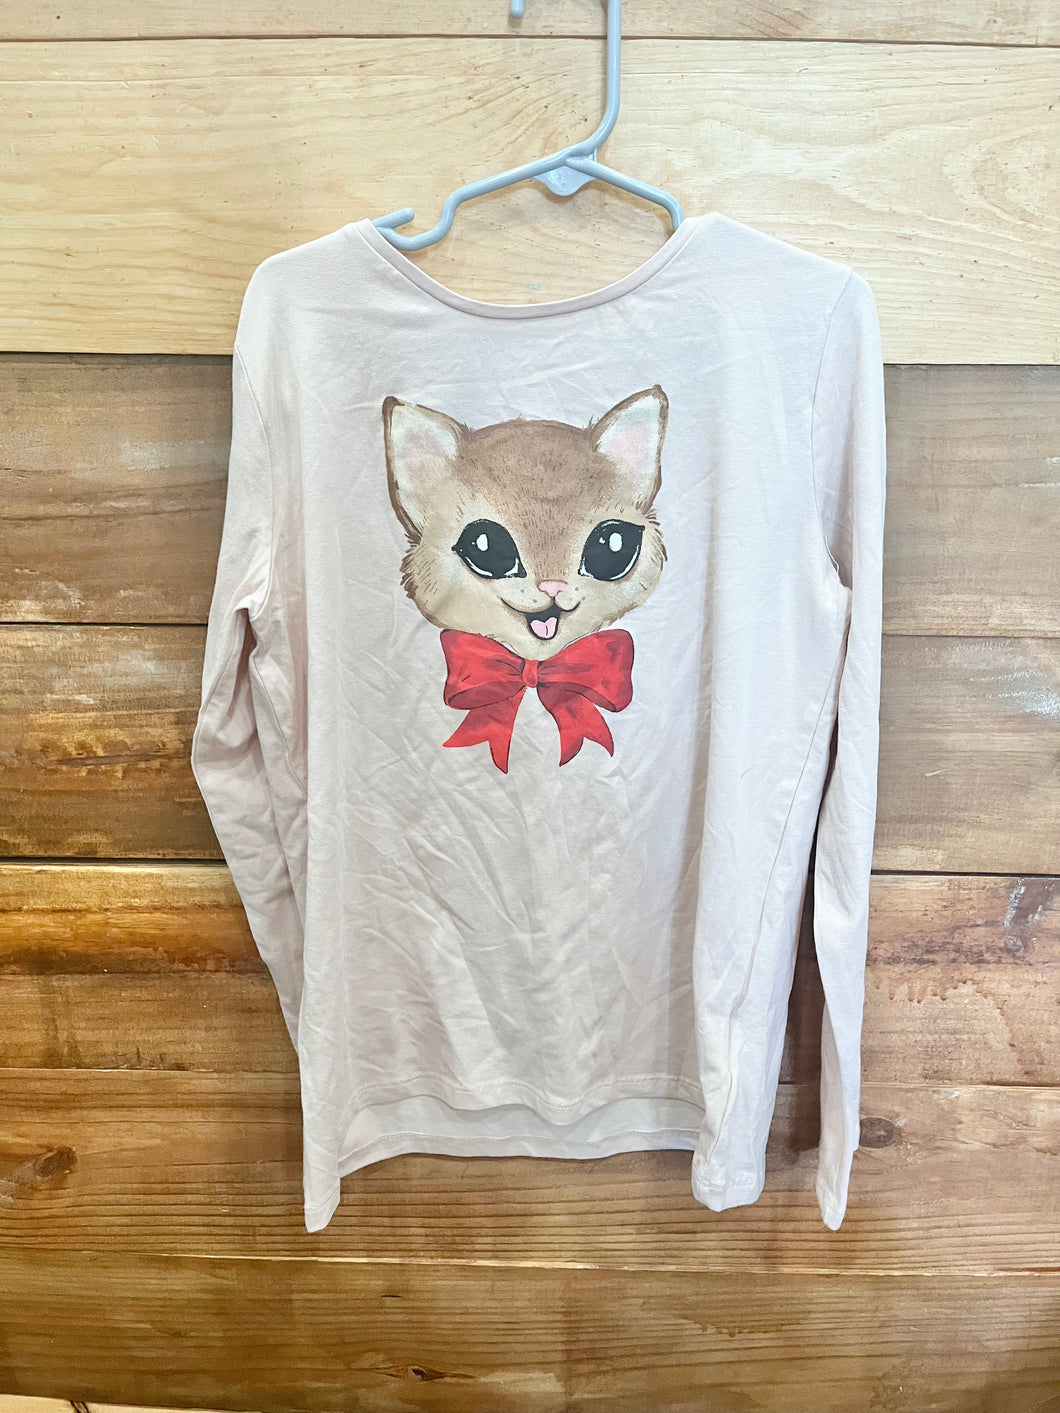 H&M Pink Kitten Shirt Size 6-8